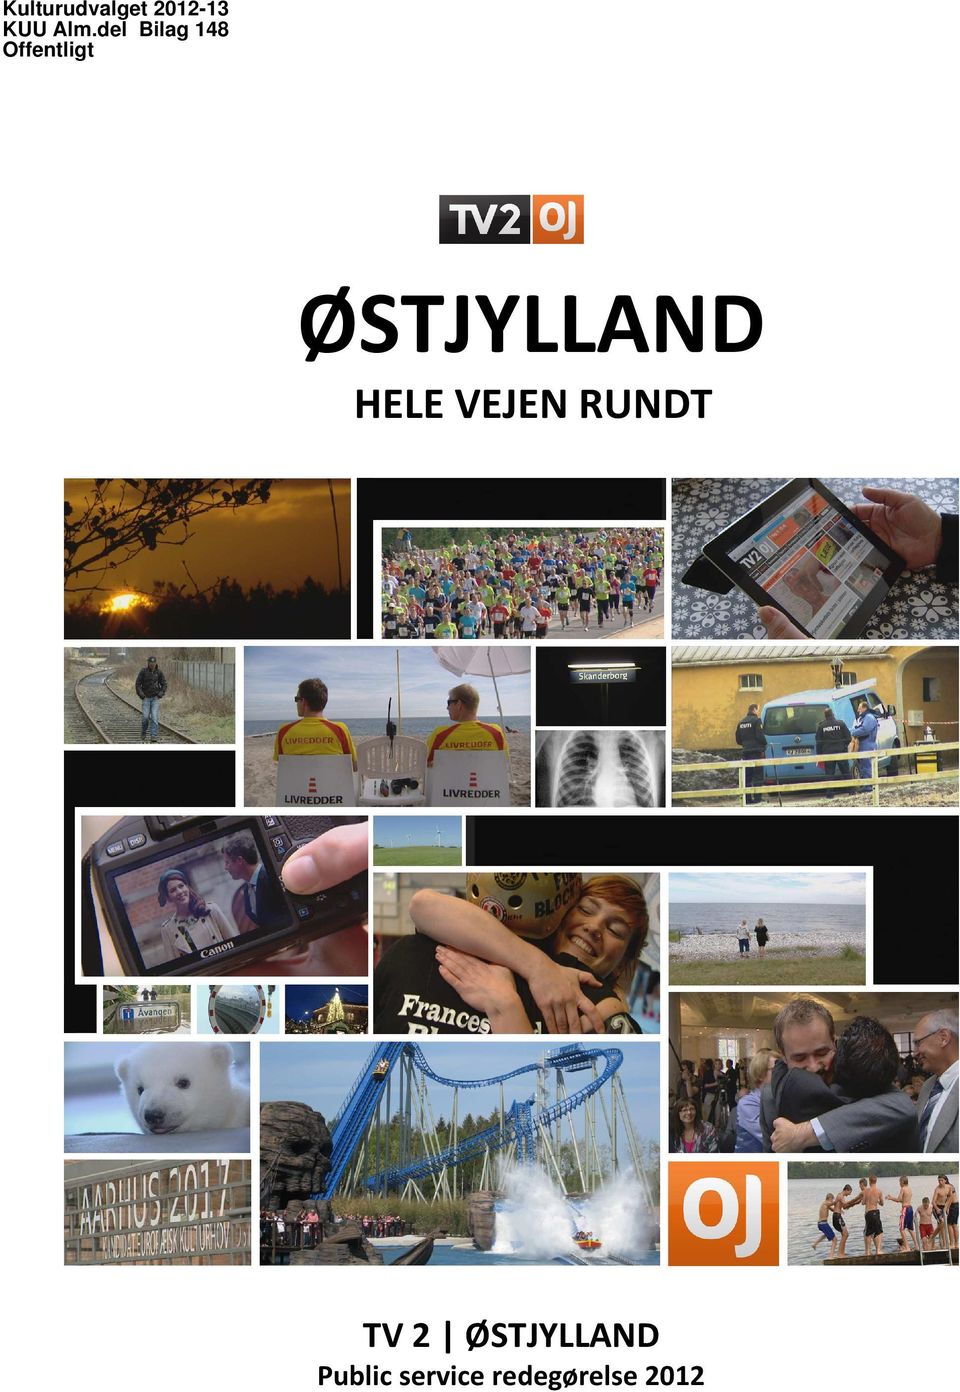 ØSTJYLLAND HELE VEJEN RUNDT TV 2